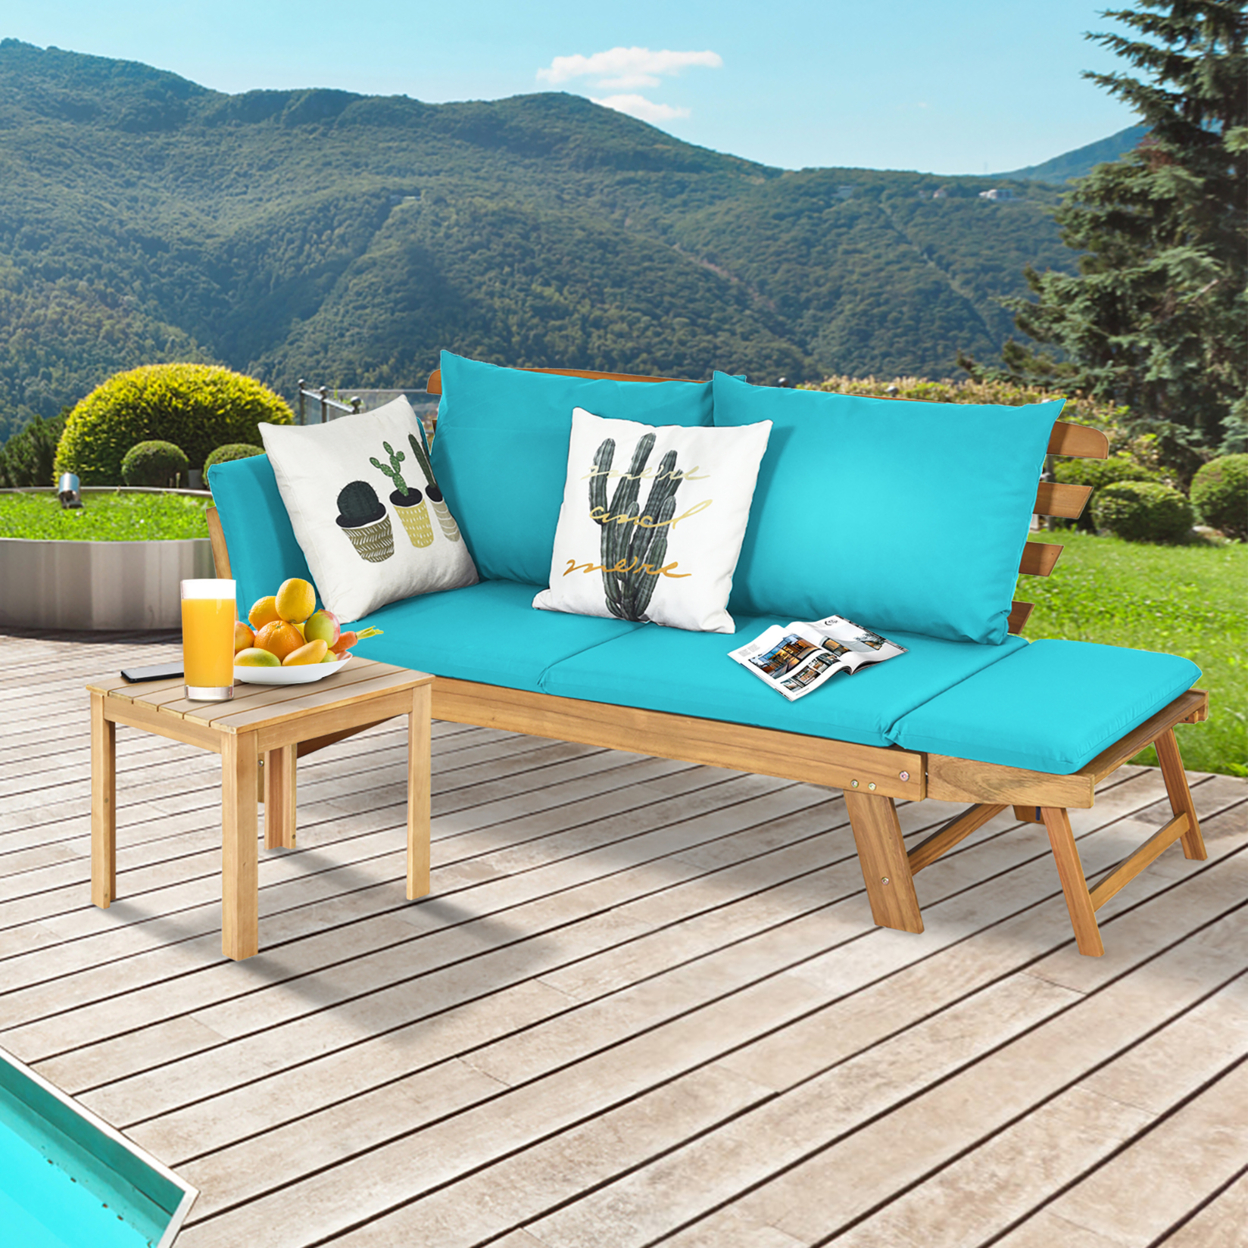 Adjustable Patio Sofa Daybed Acacia Wood Furniture W/ Turquoise Cushions